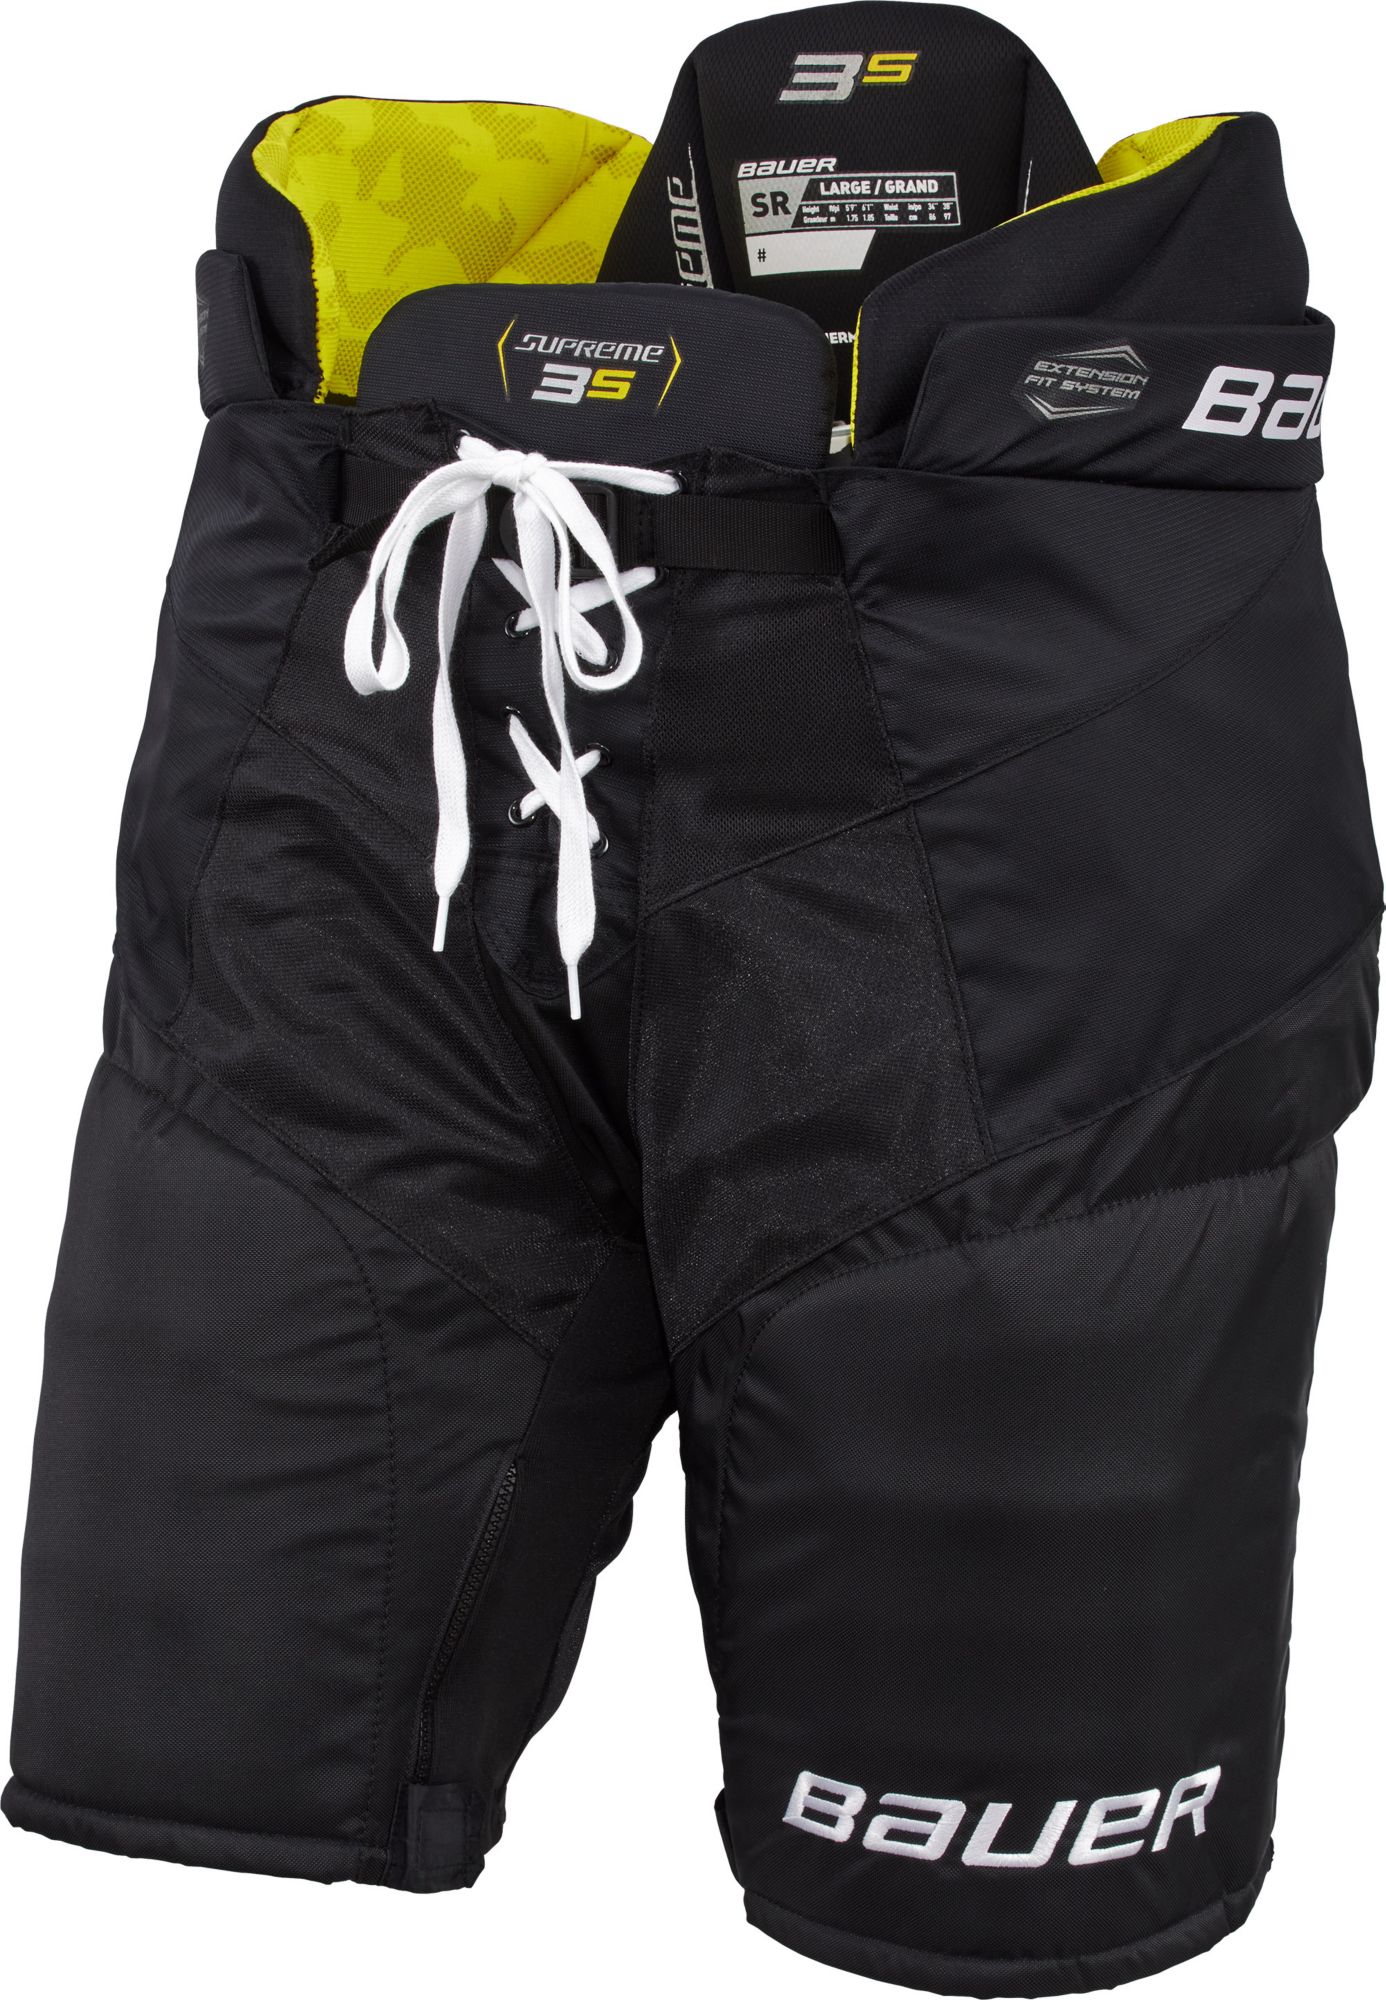 Bauer Supreme 3S Ice Hockey Pants - Senior | Dick's Sporting Goods